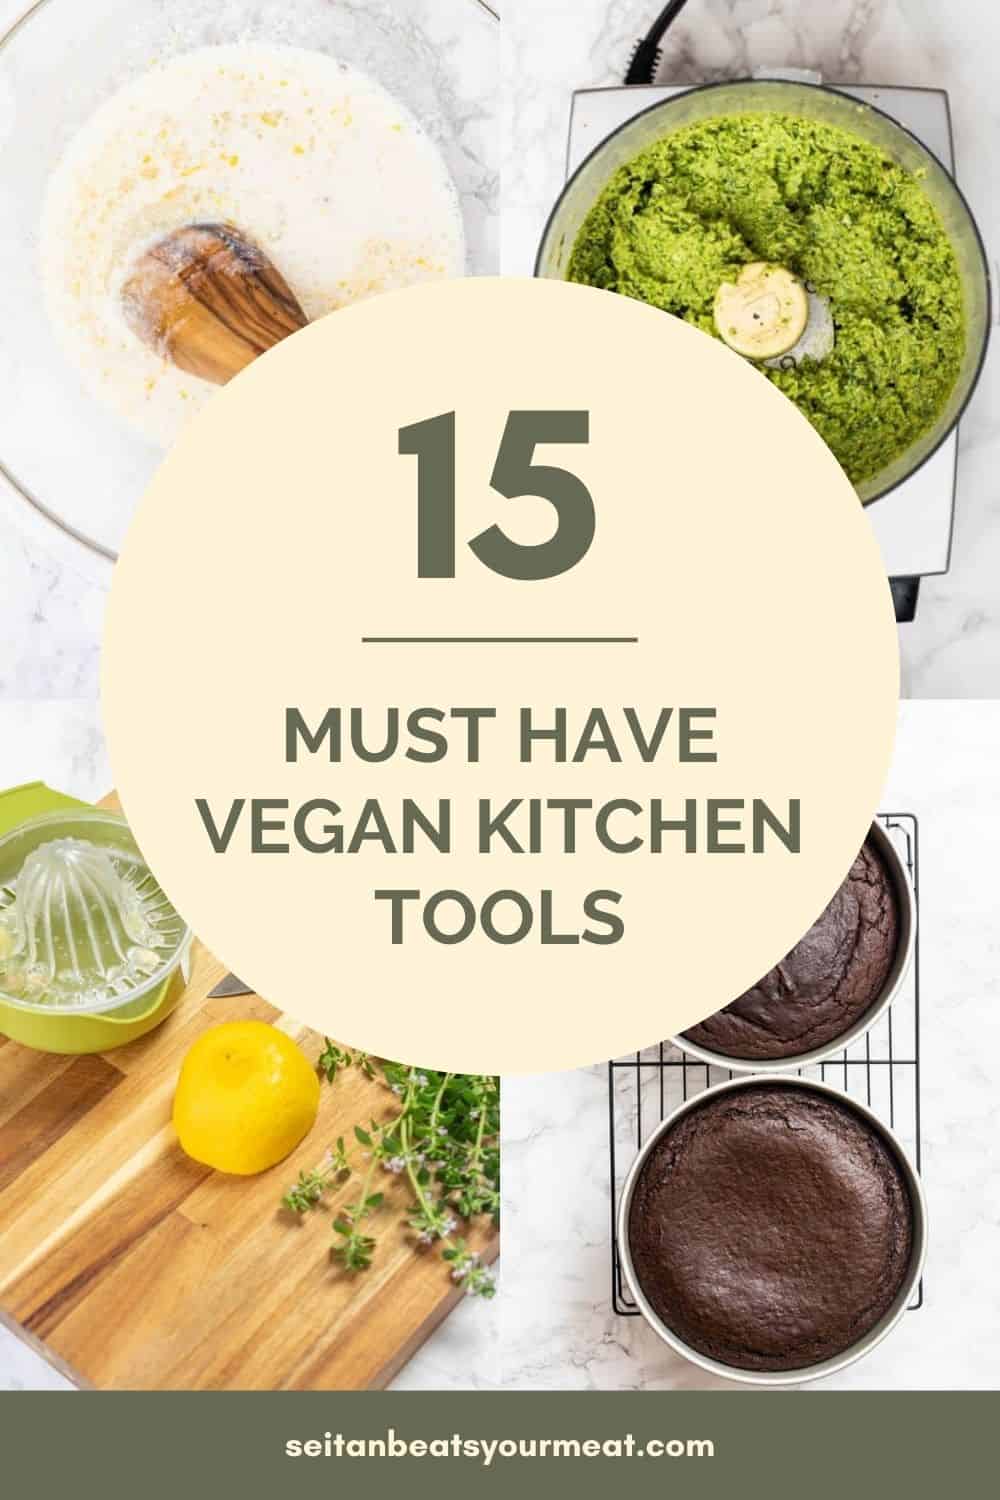 https://seitanbeatsyourmeat.com/wp-content/uploads/2022/01/must-have-vegan-kitchen-tools-pin.jpg